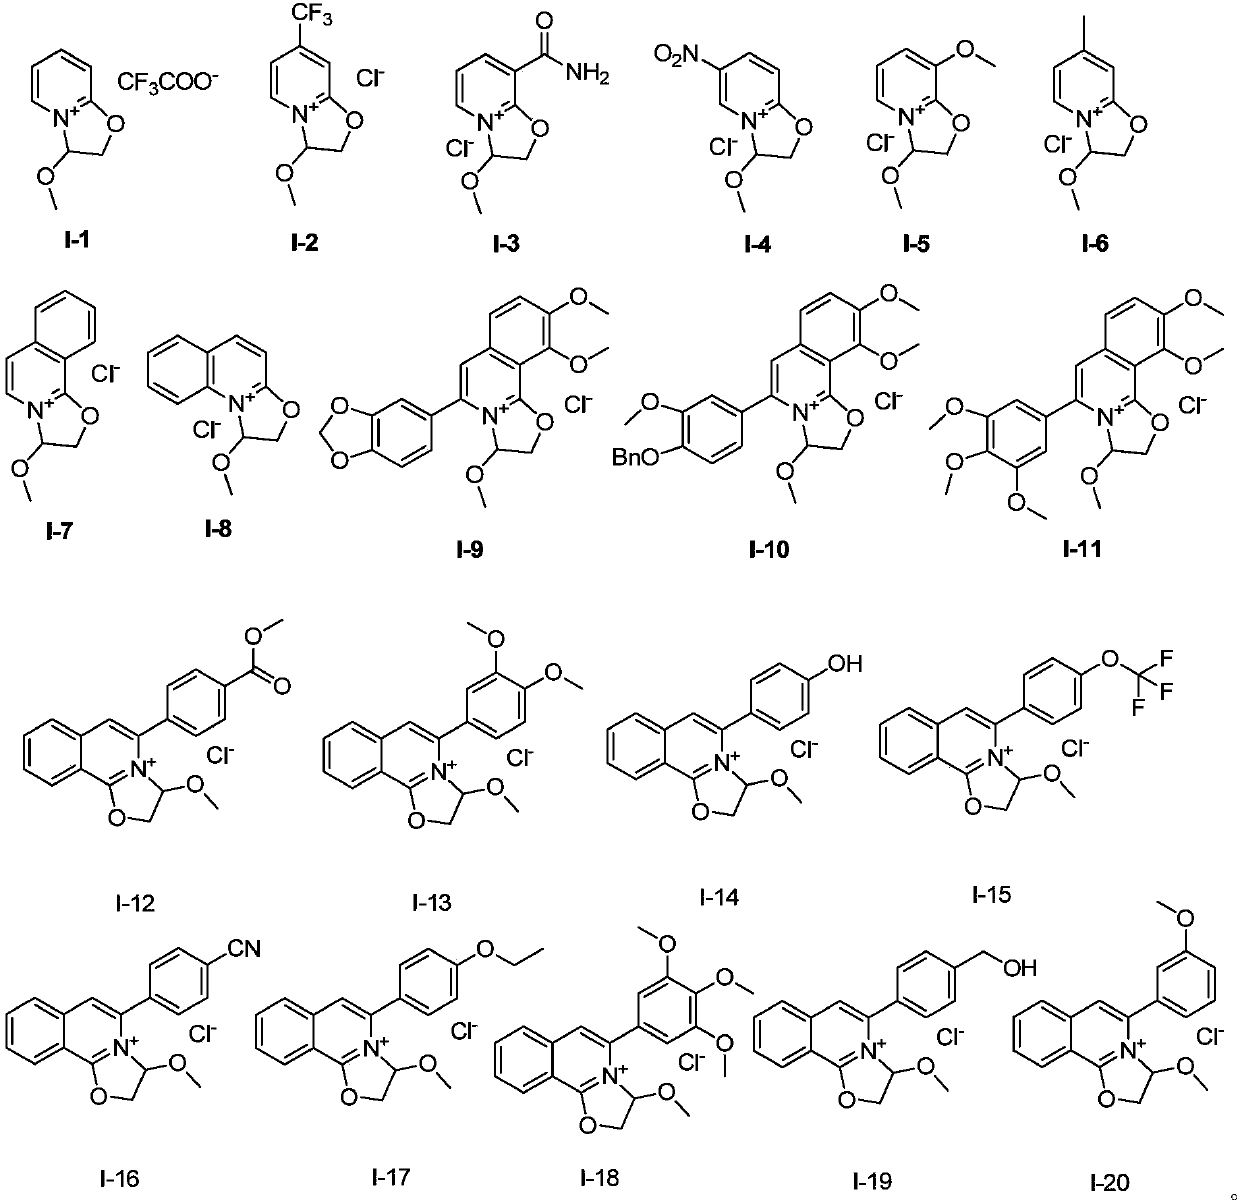 Oxazolopyridine quaternary ammonium salt compound and preparation method and application thereof